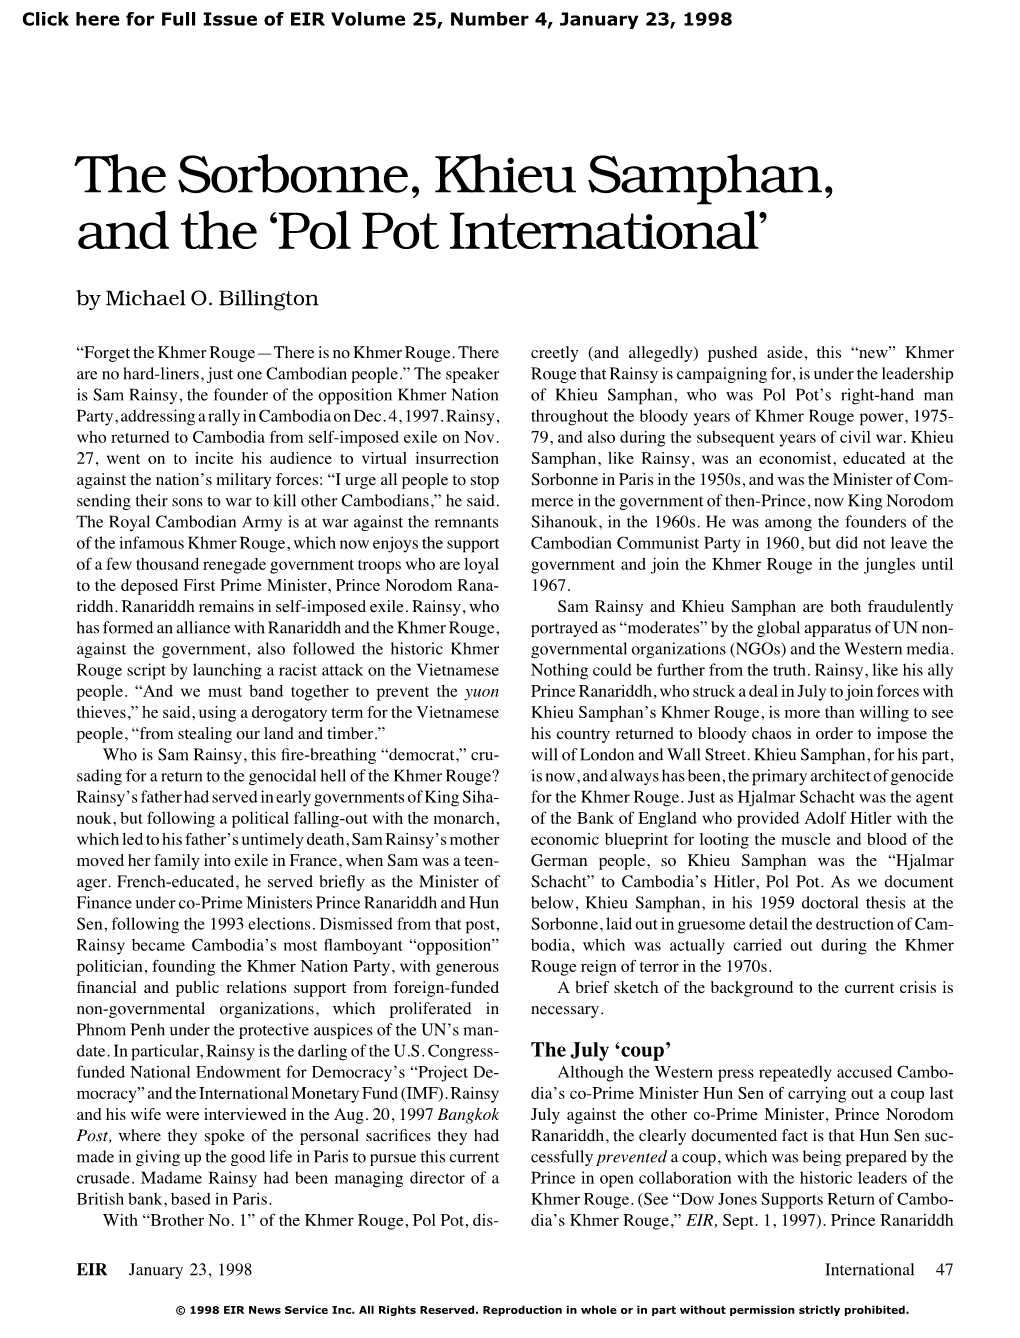 The Sorbonne, Khieu Samphan, and the 'Pol Pot International'